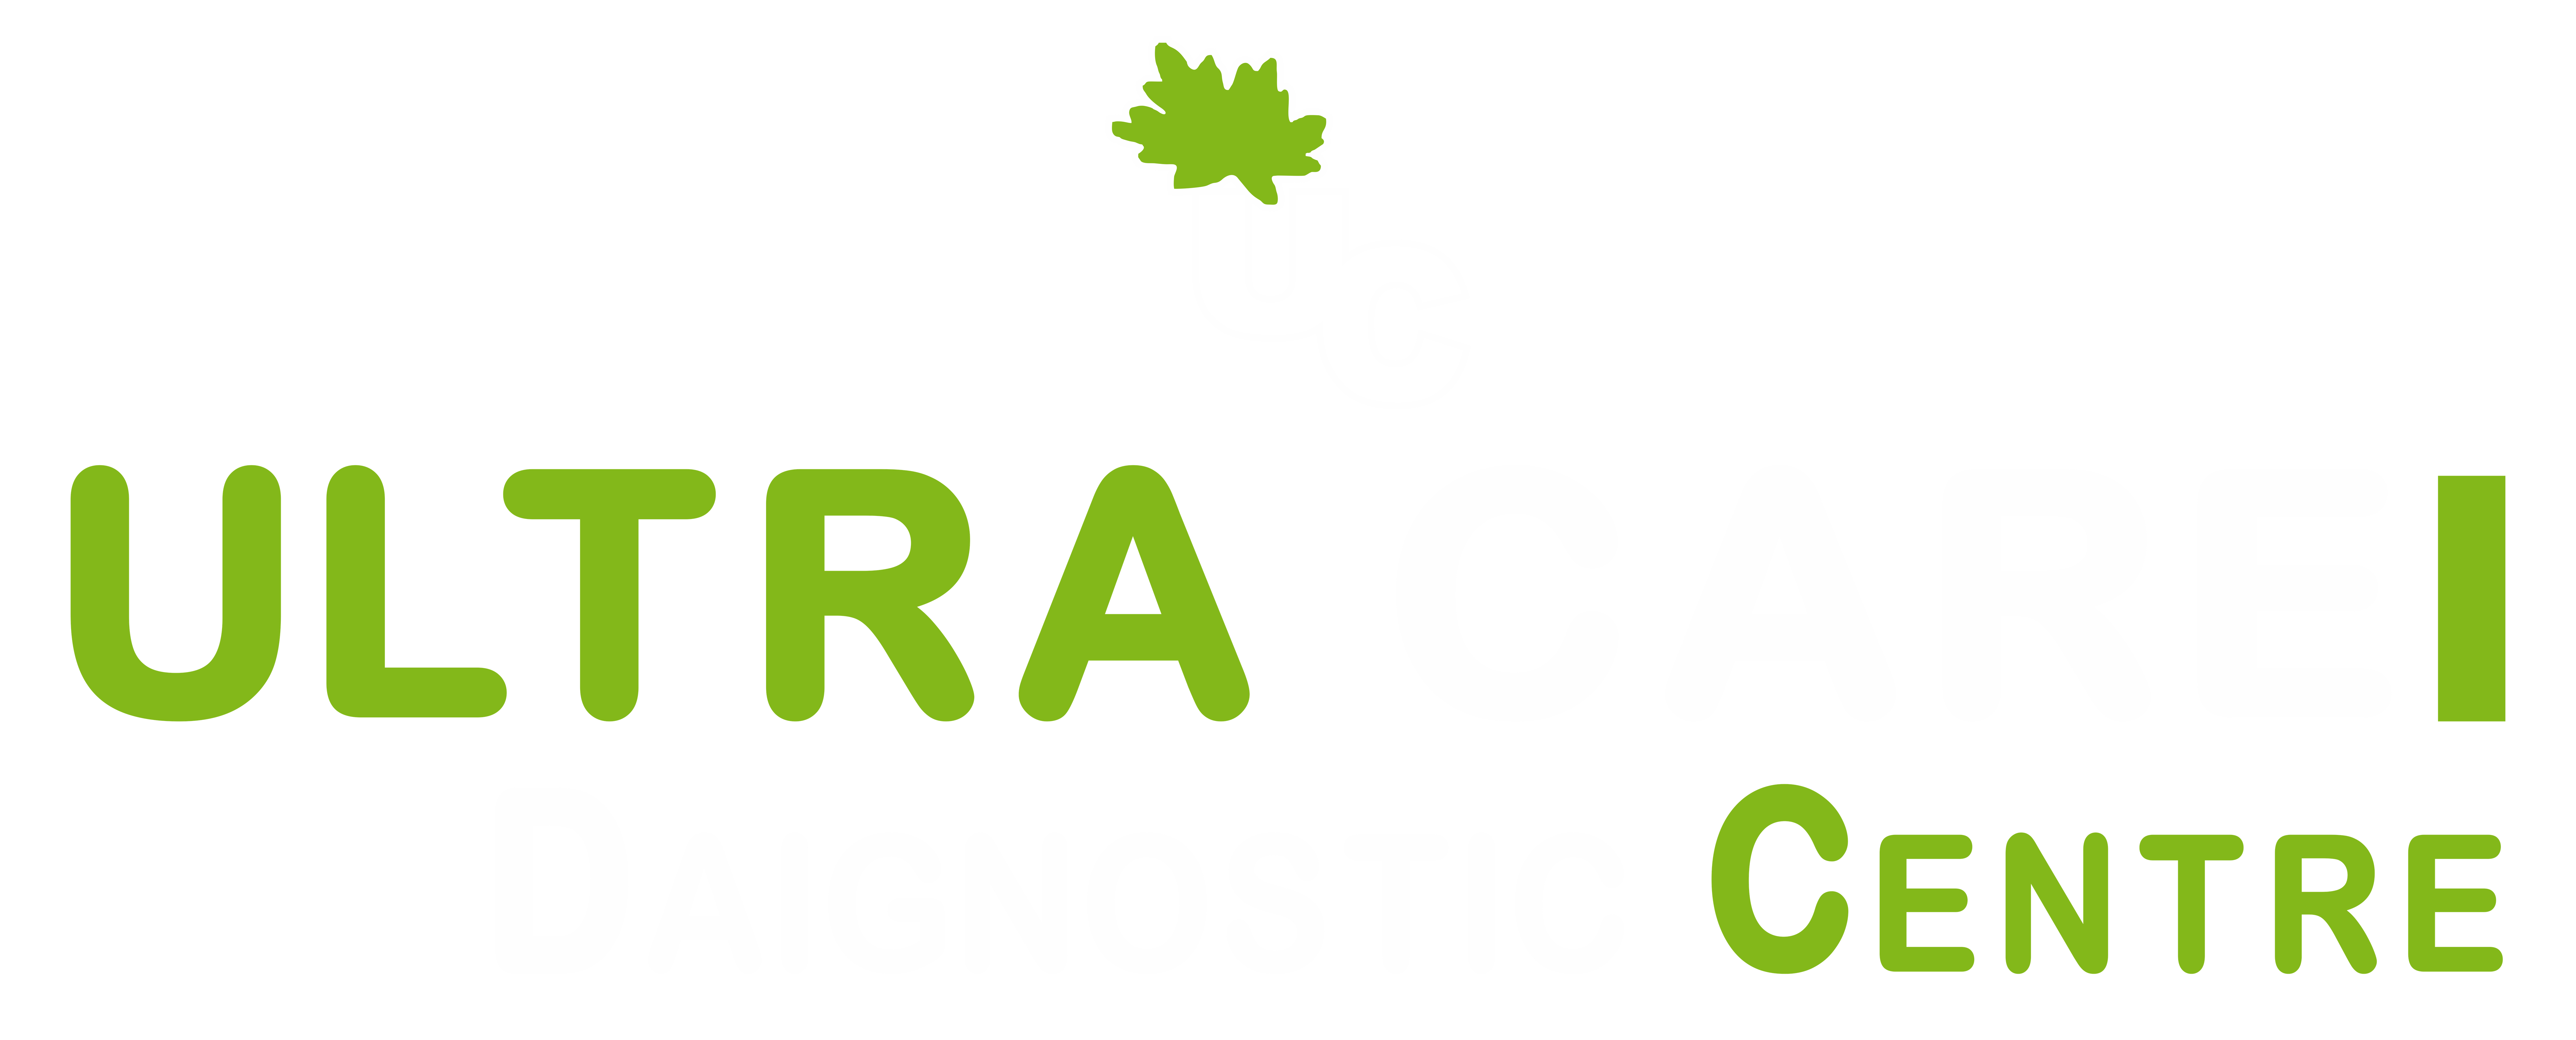 Ultra care